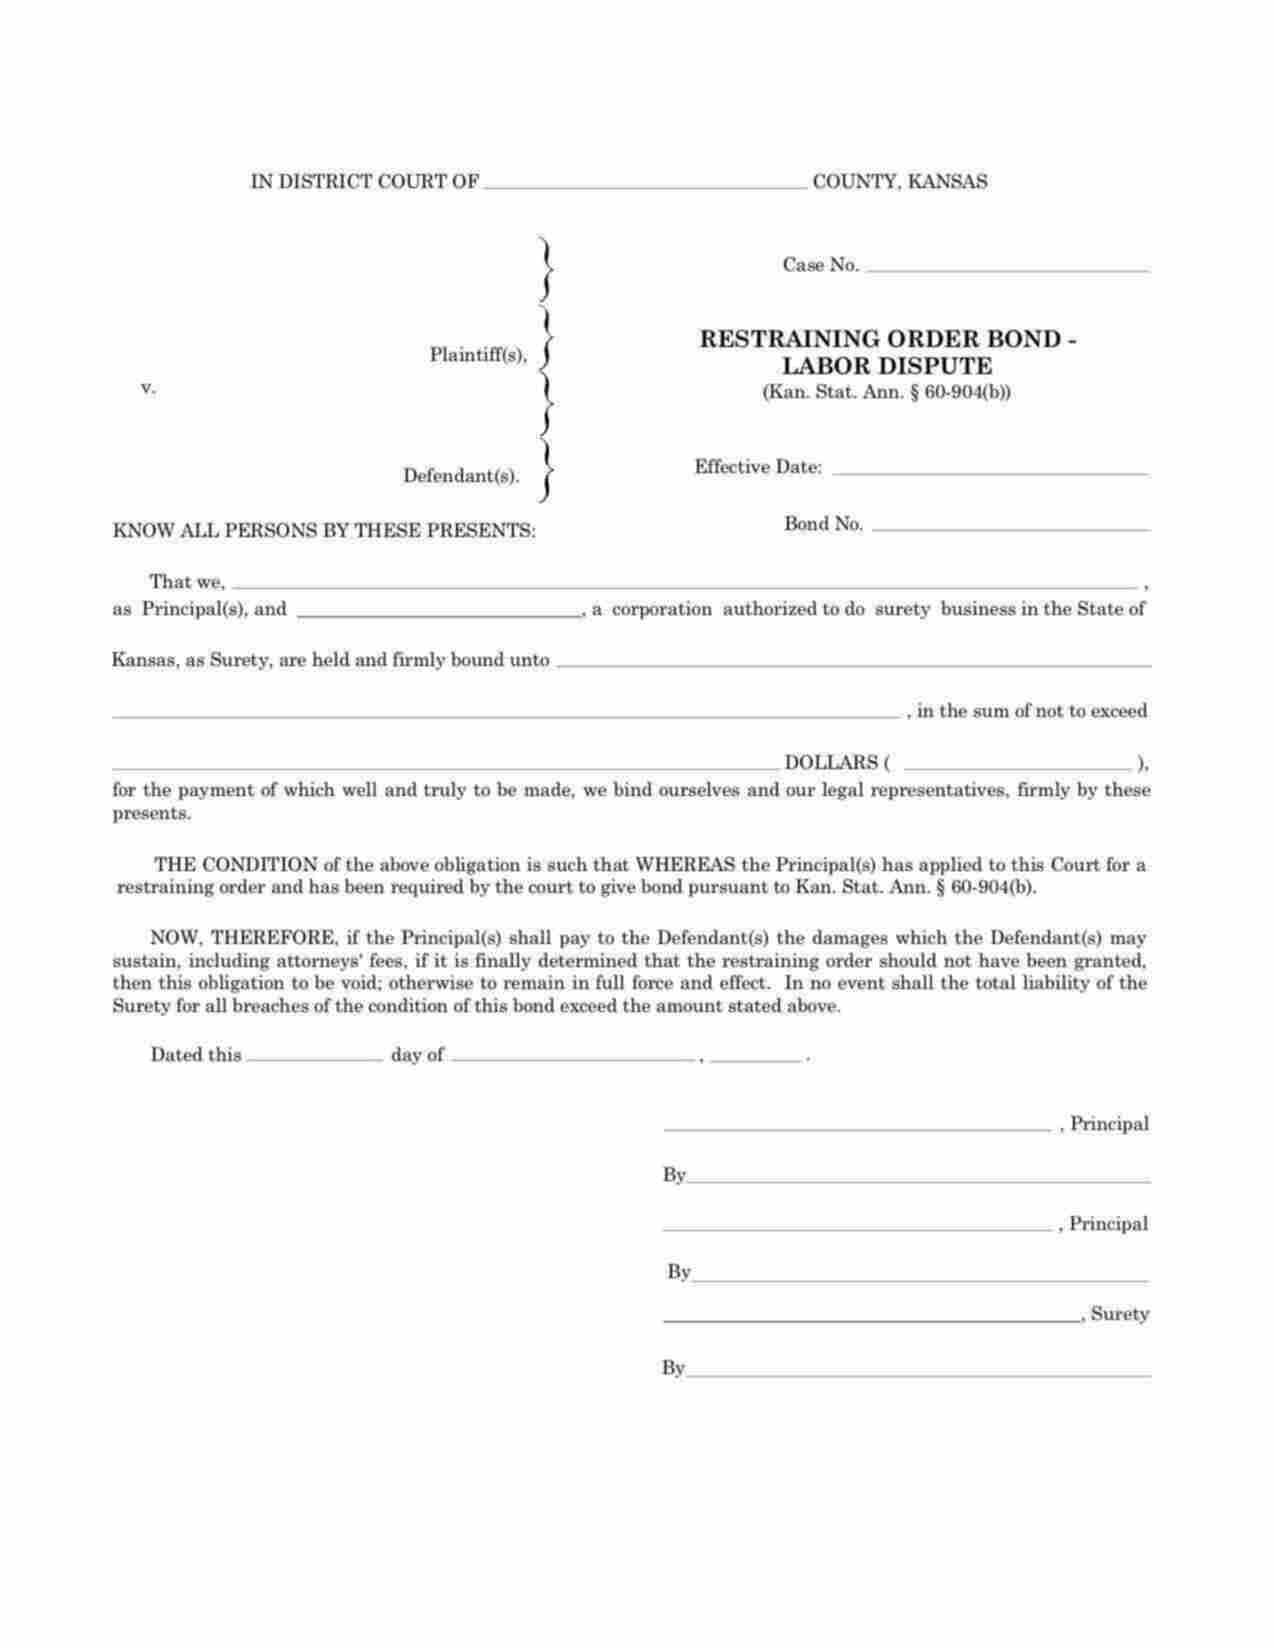 Kansas Restraining Order - Labor Dispute Bond Form